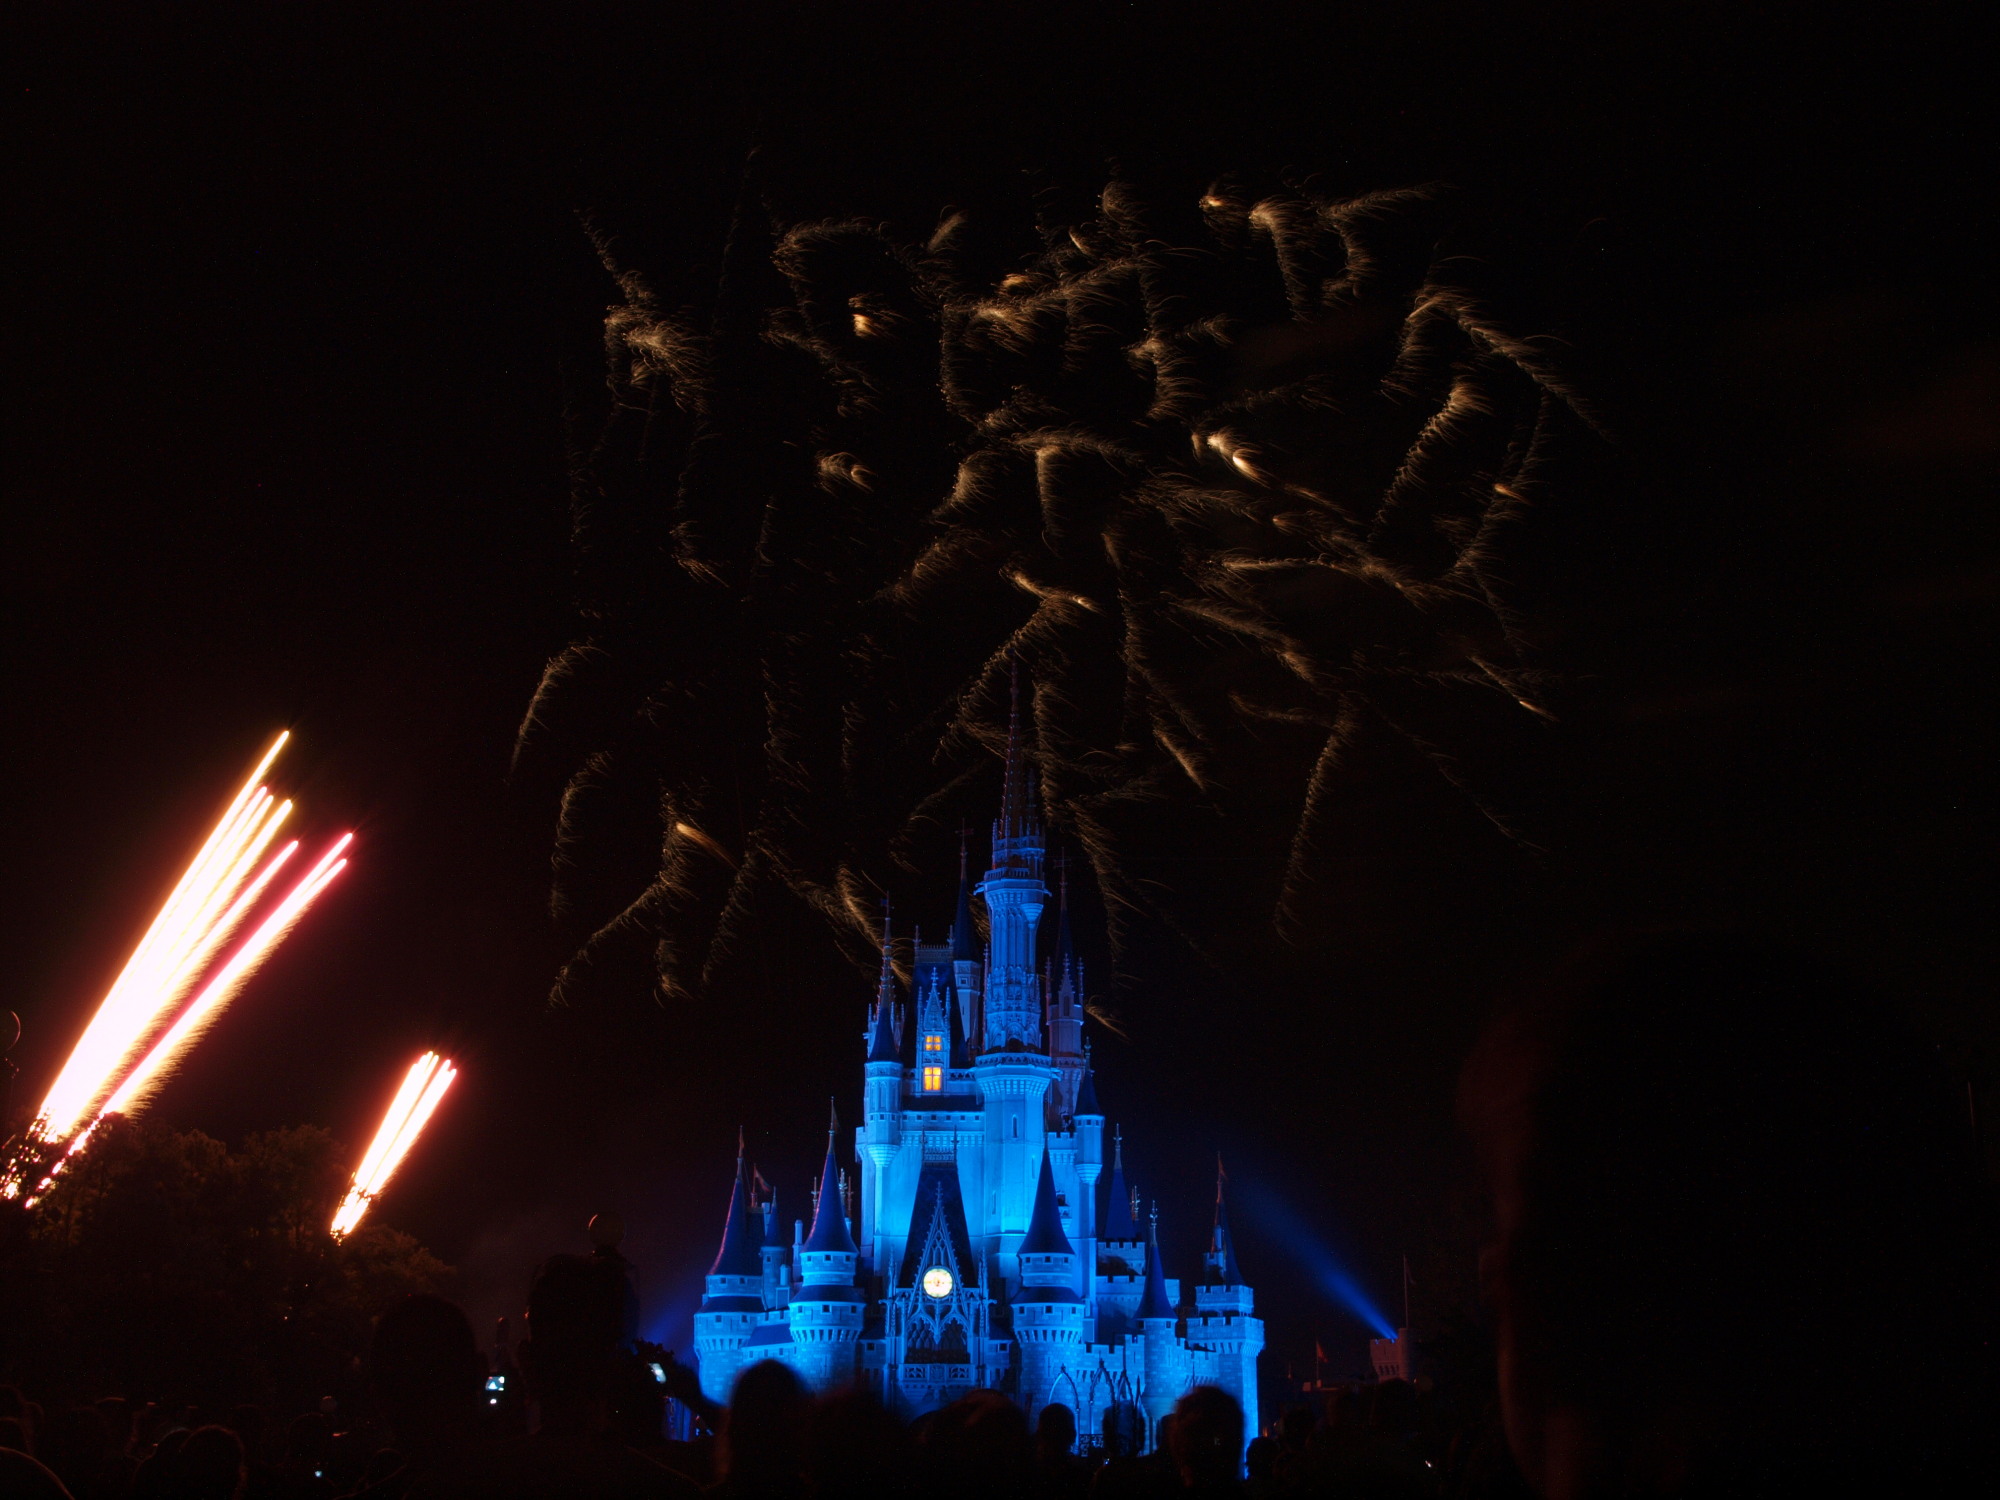 Wishes Fireworks - Magic Kingdom